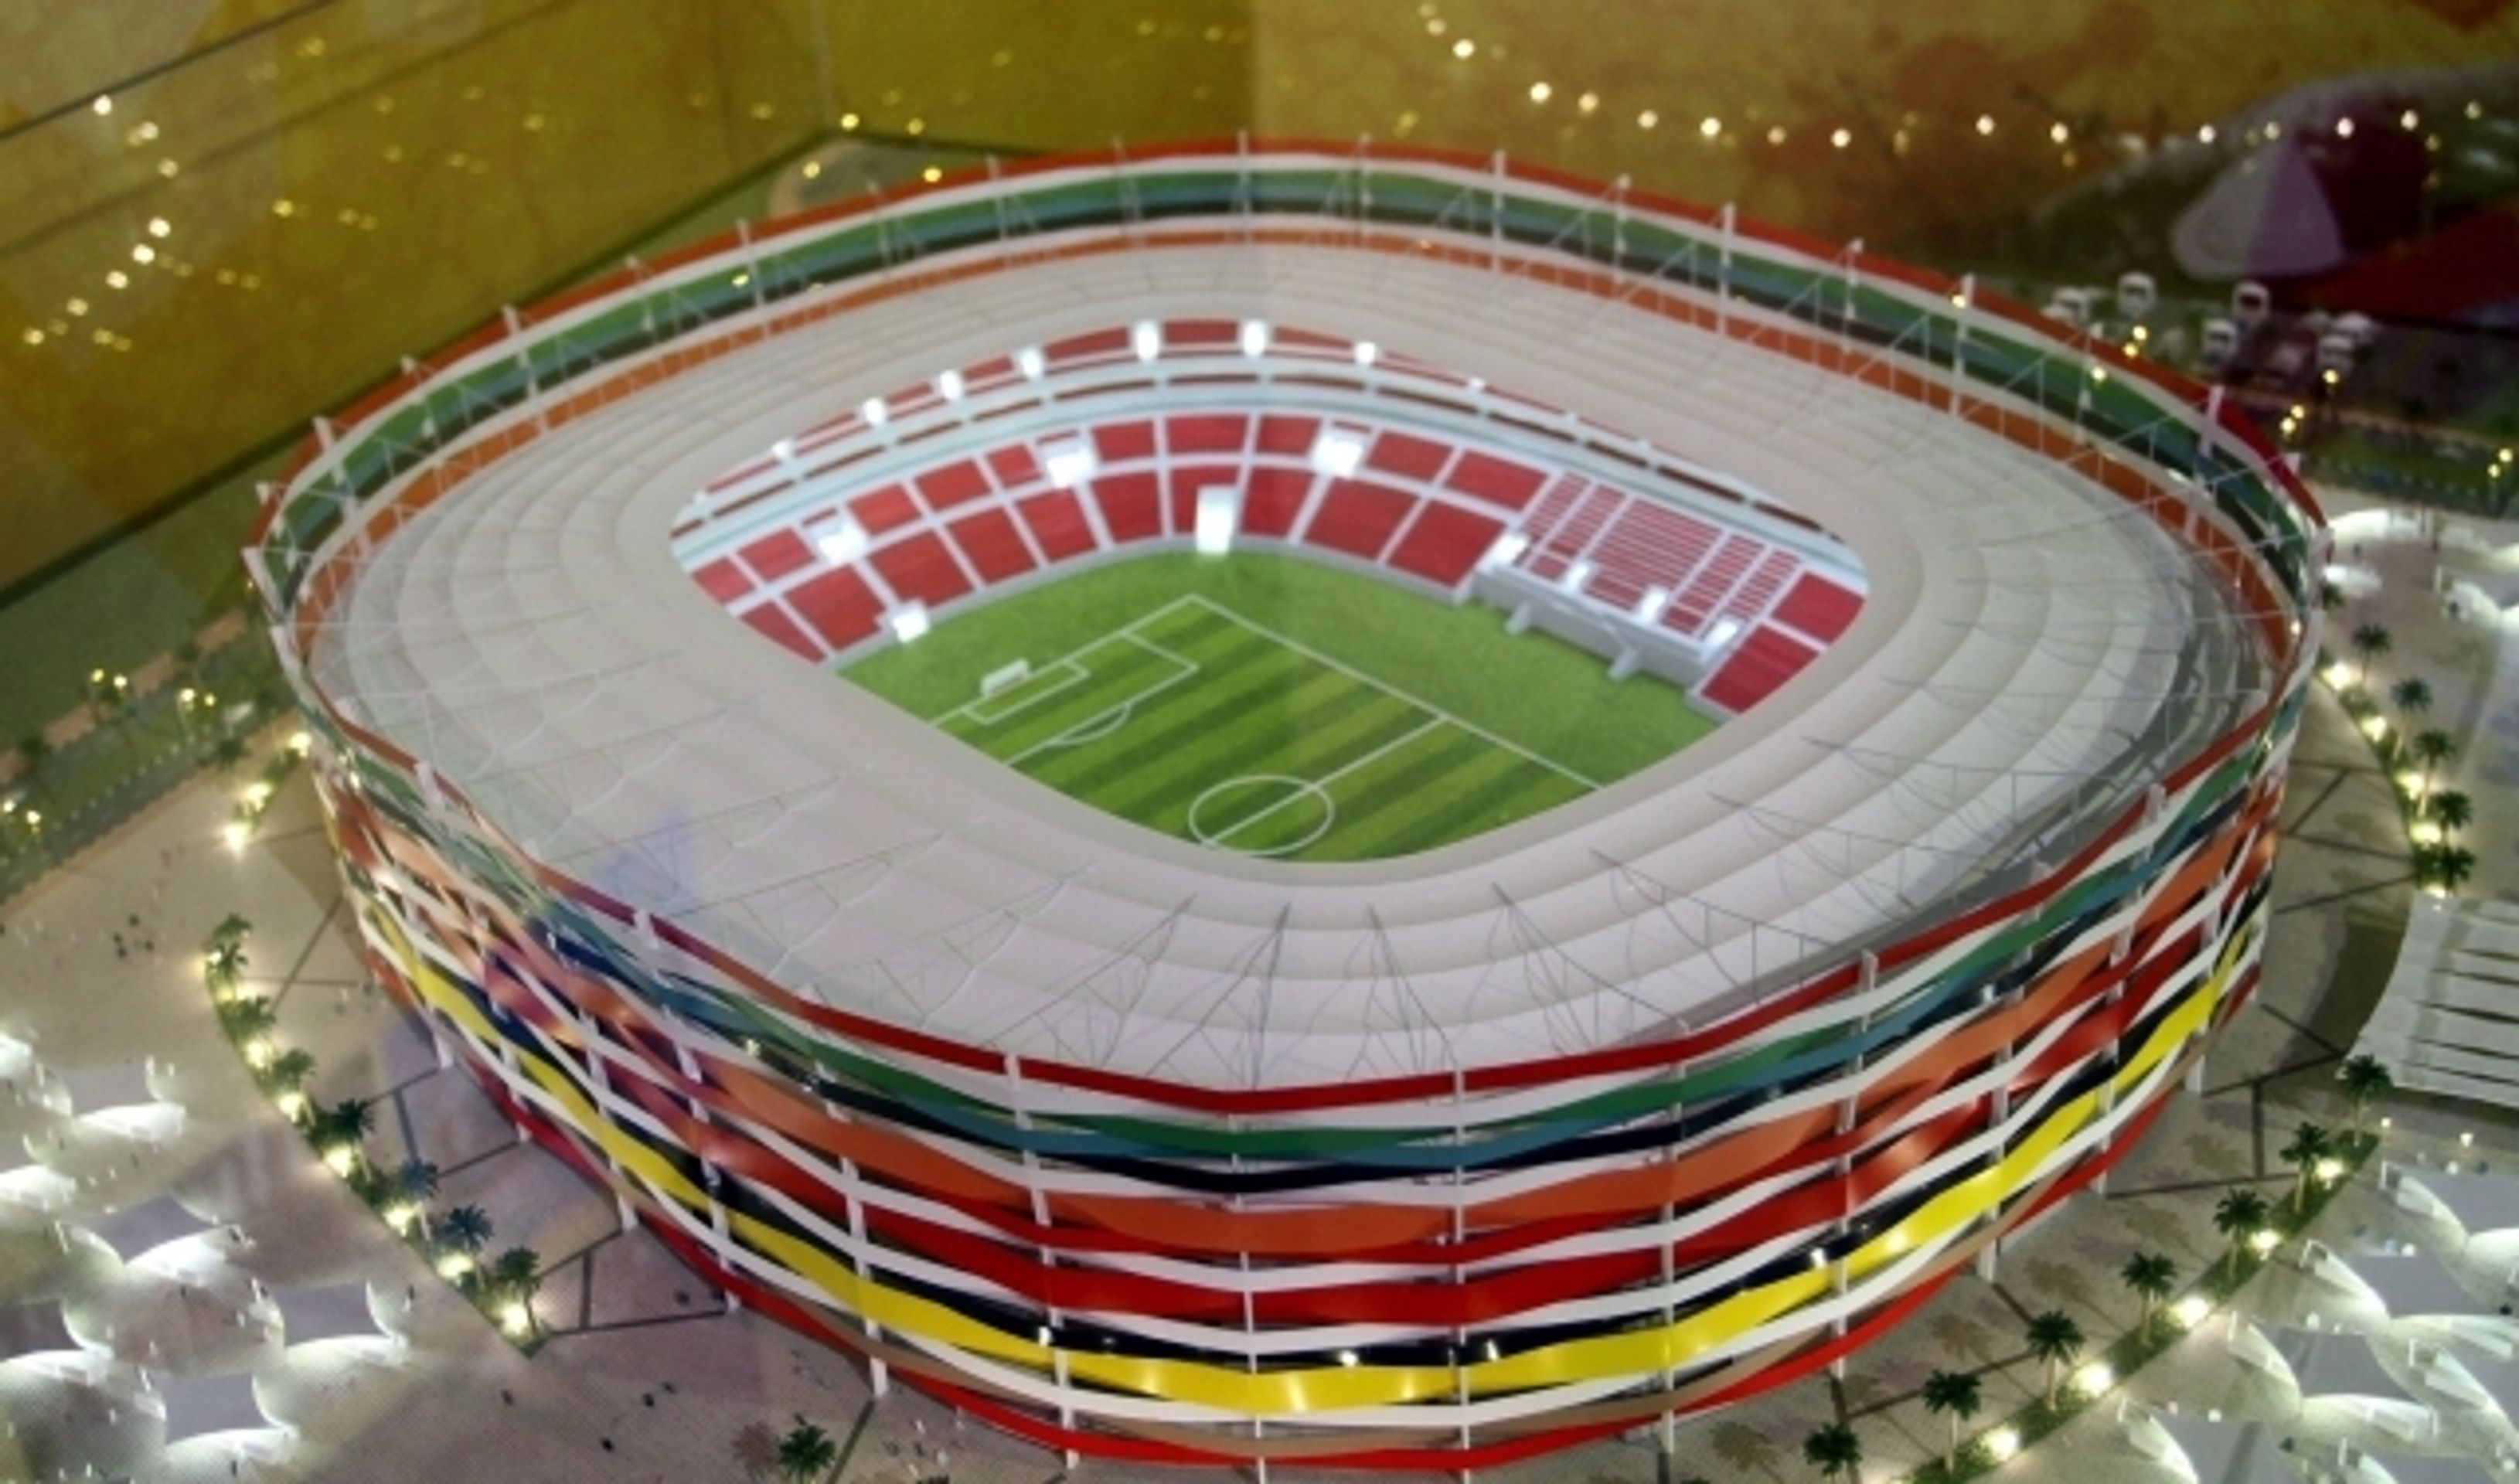 MS 2022 - Thani bin Jassim Stadium - GALERIE: Stadiony pro fotbalové MS 2022 v Kataru (4/11)